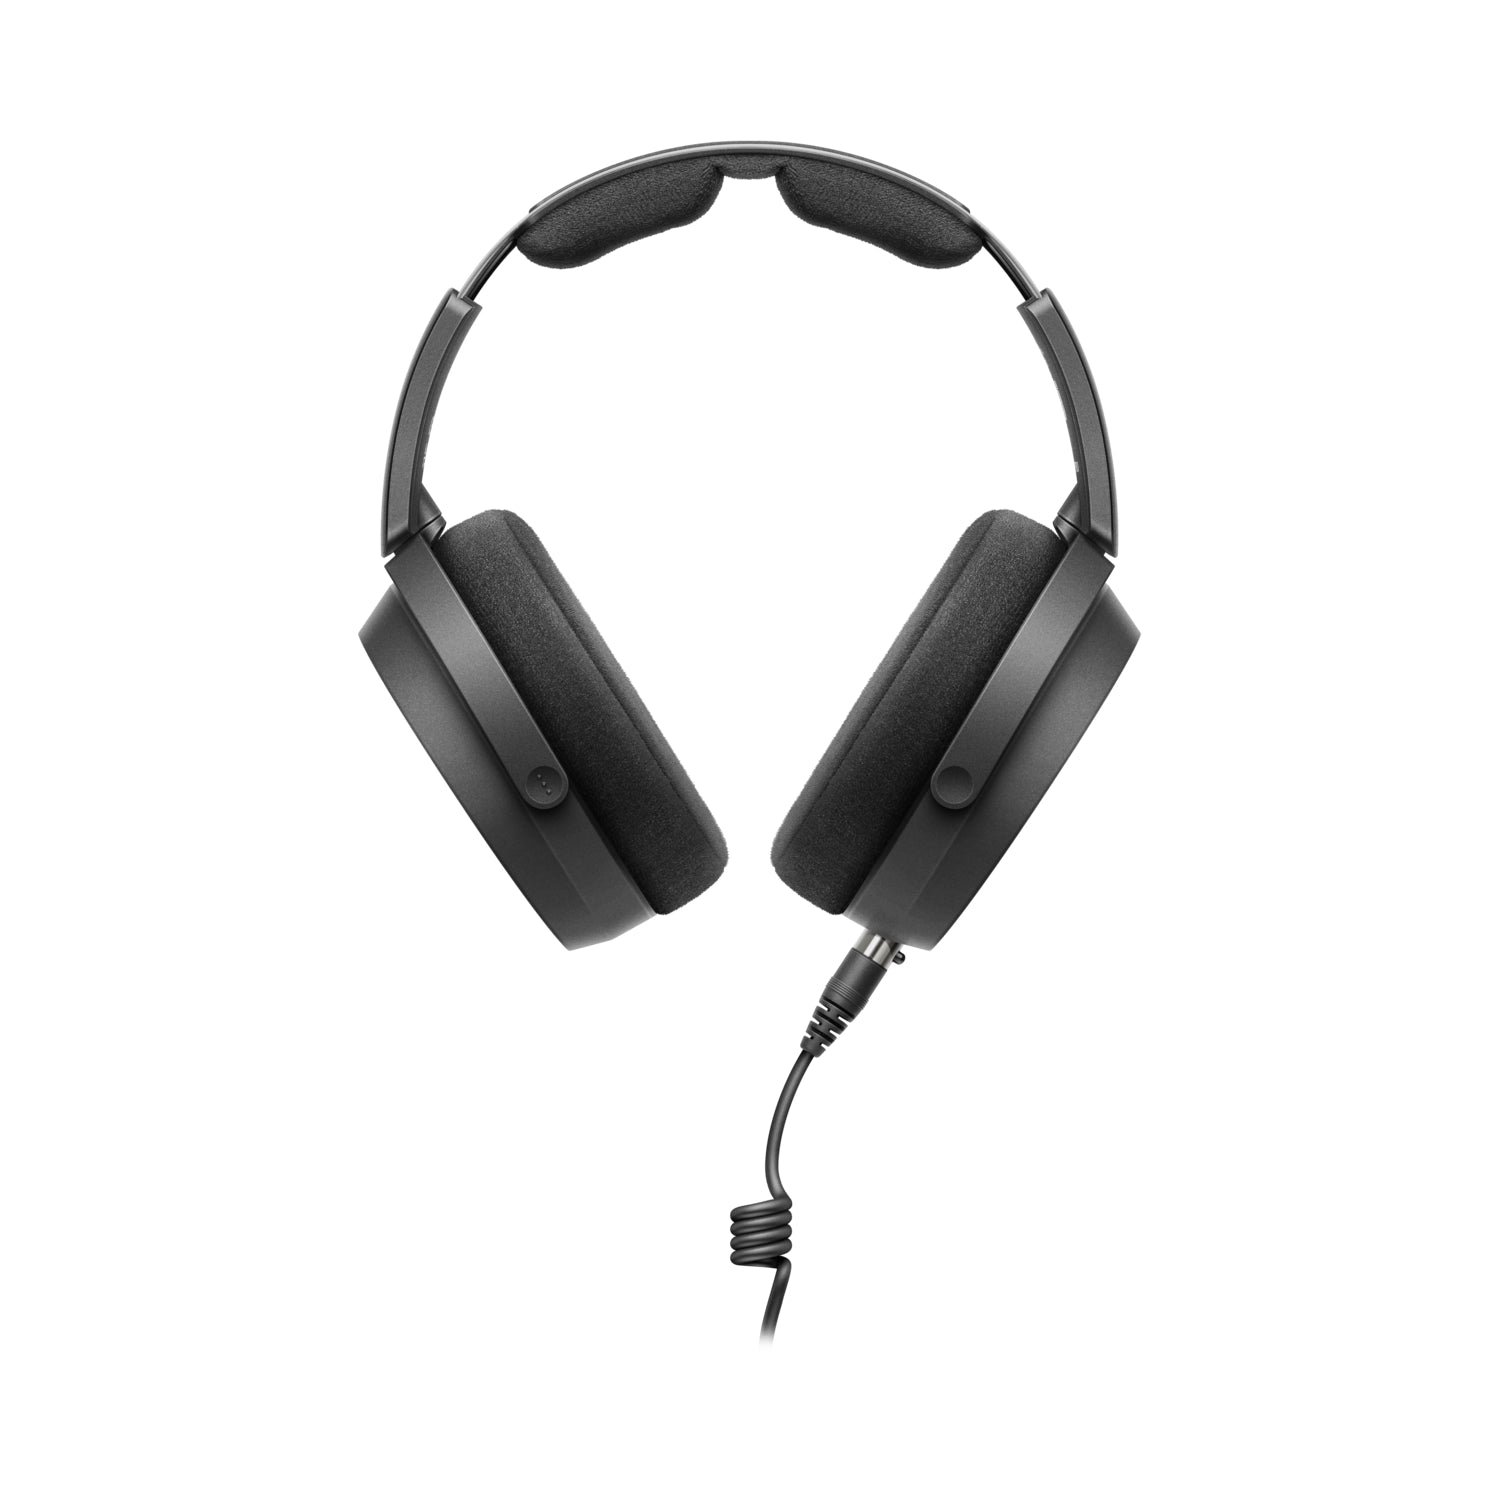 Sennheiser Hd 490 Pro Professional Reference Open-Back Studio Headphones